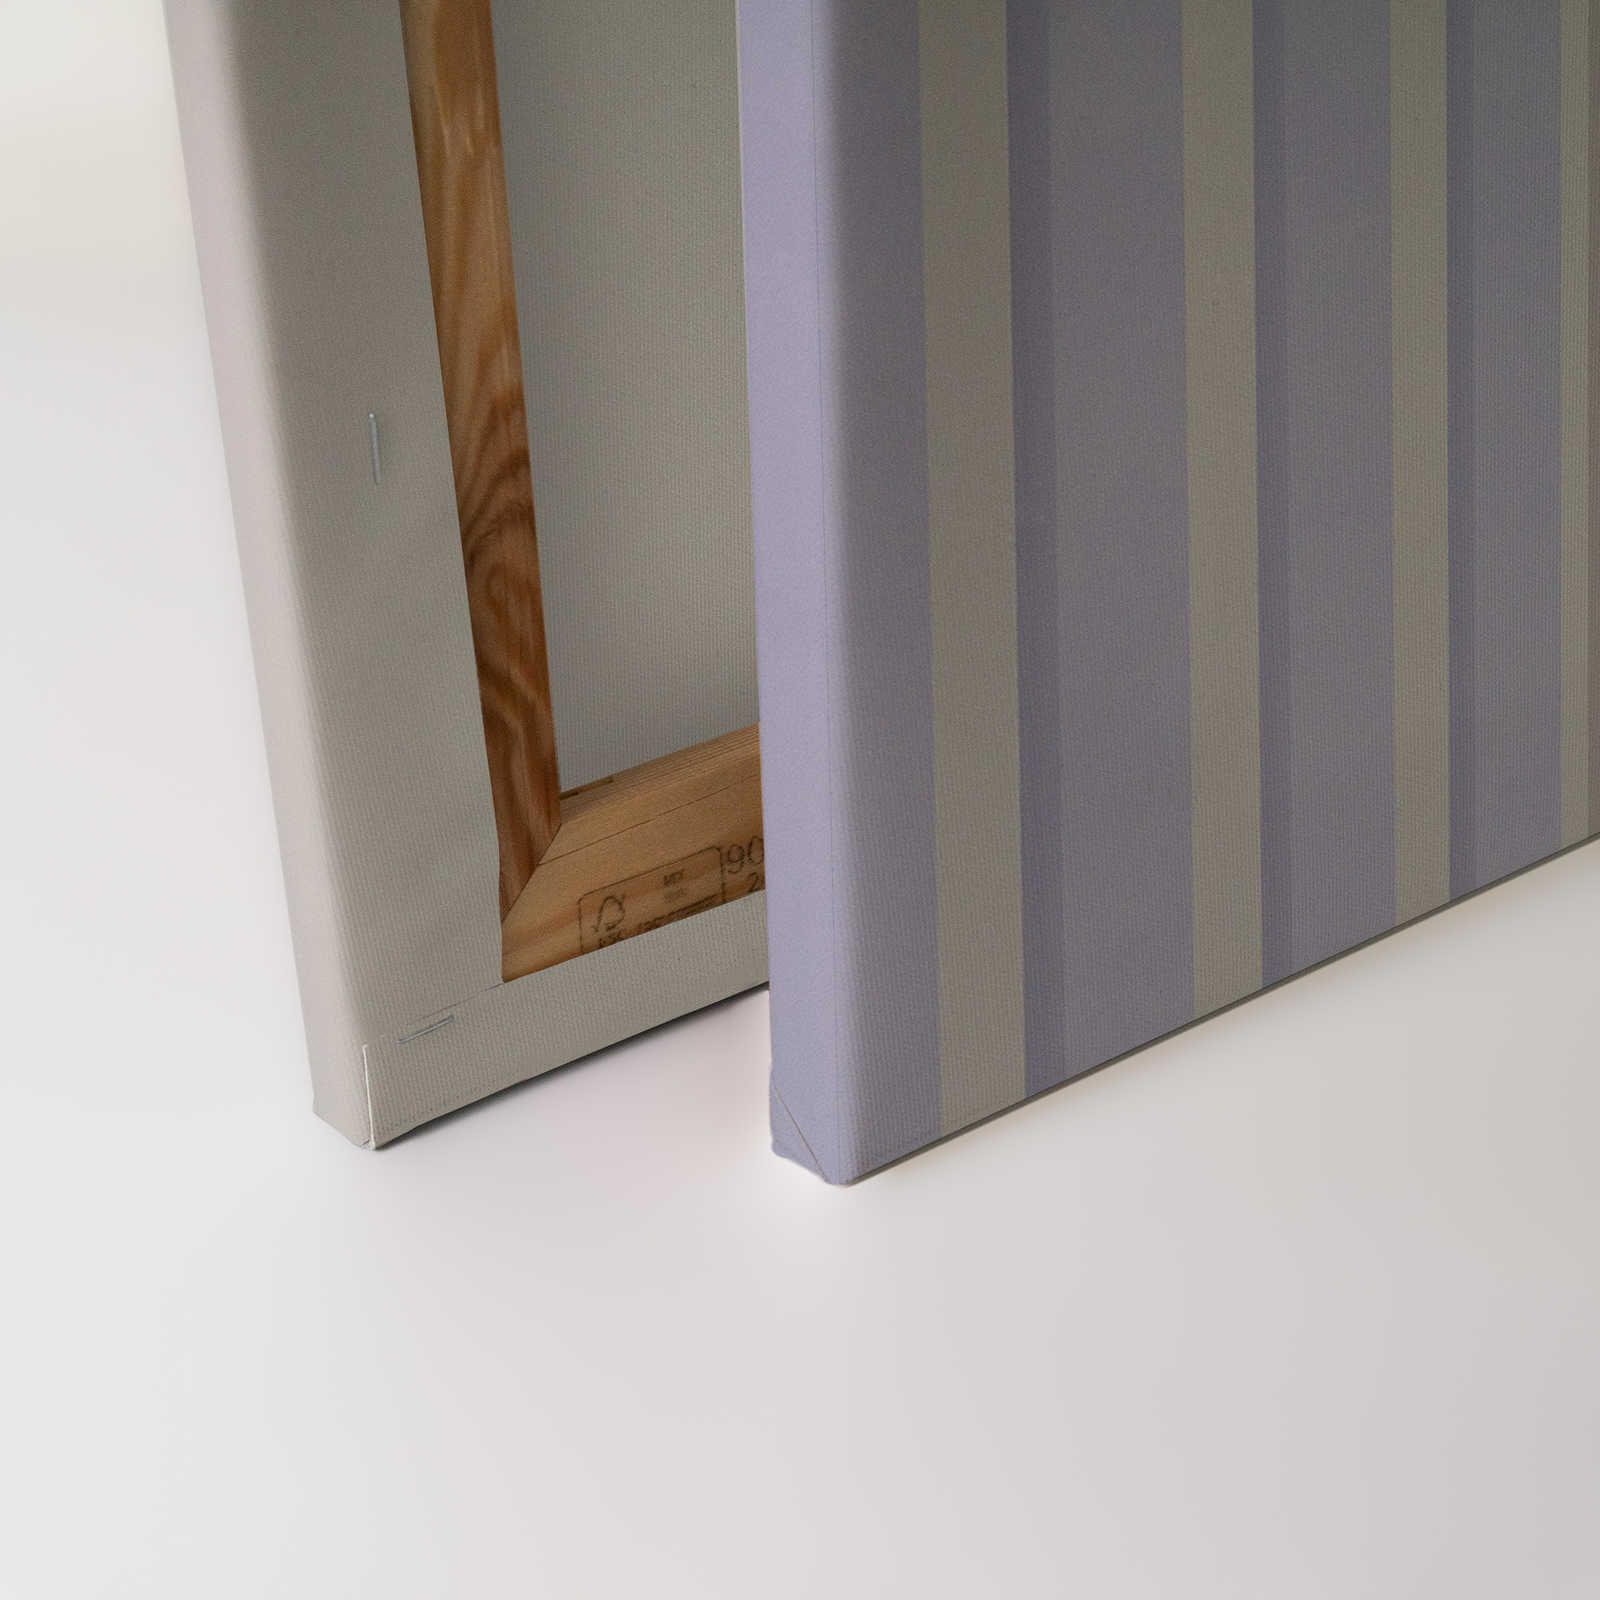             Illusion Room 1 - Canvas schilderij 3D Stripe Design in Purple & Grey - 0.90 m x 0.60 m
        